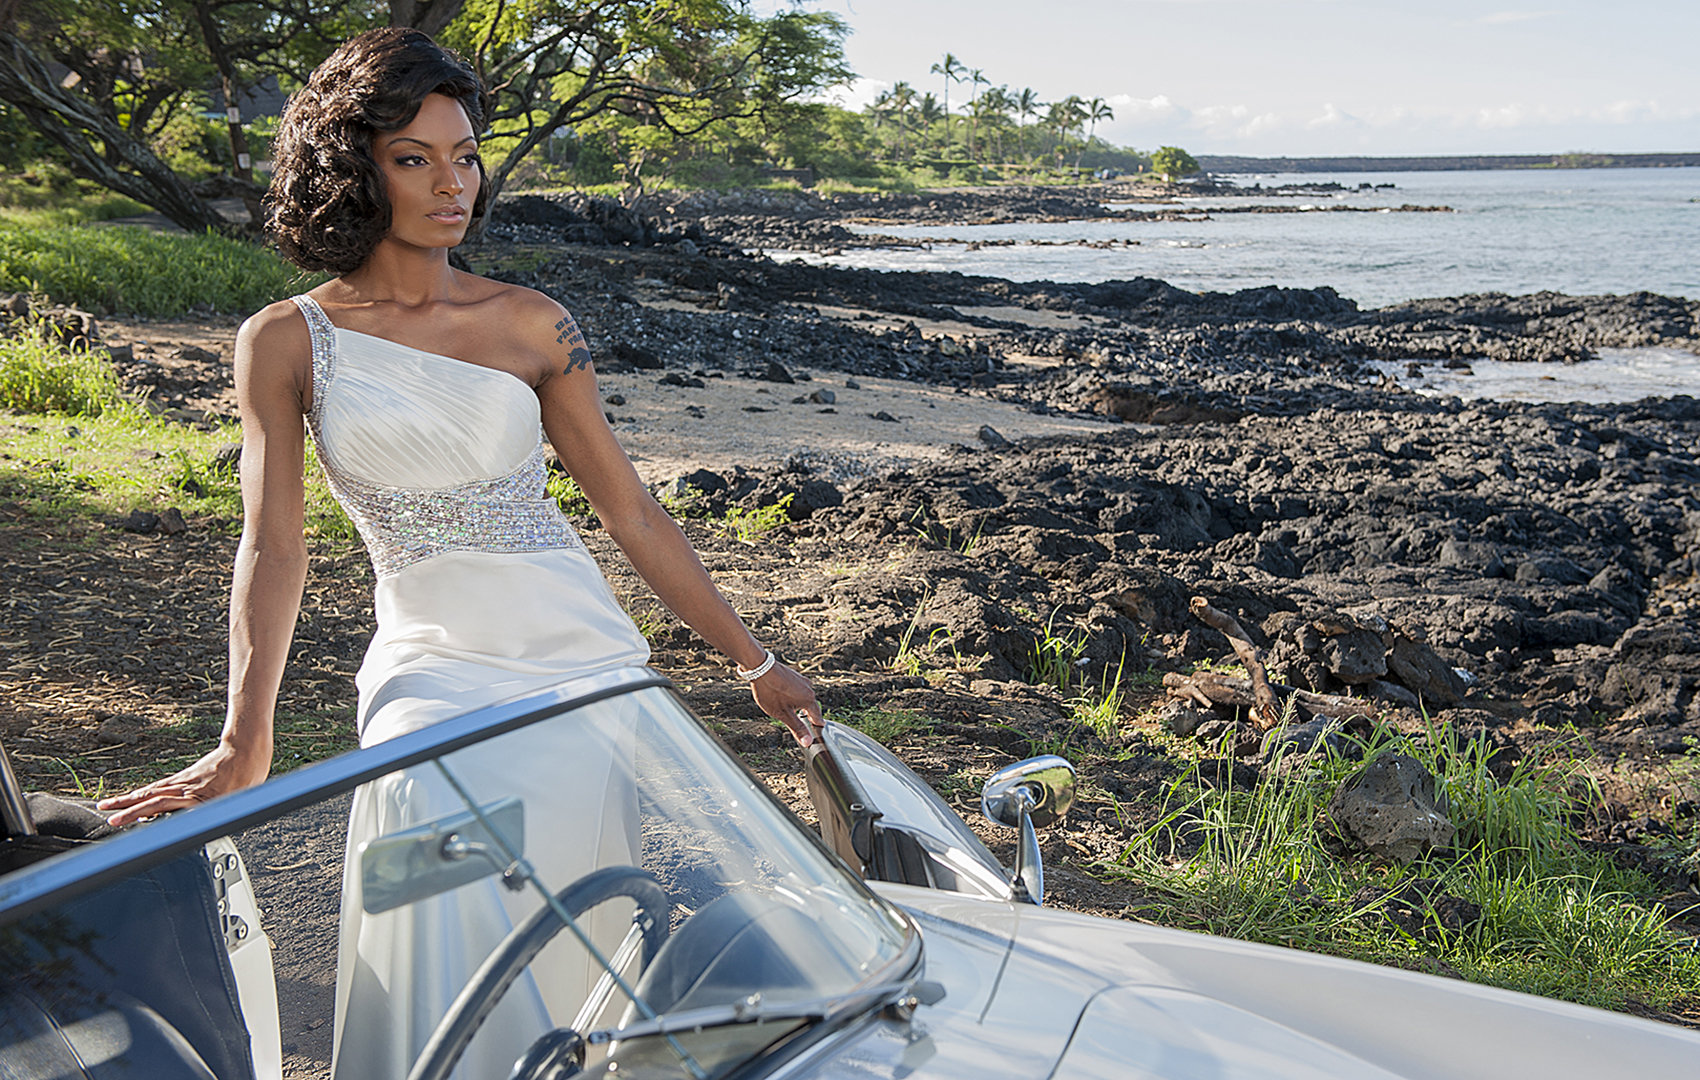 Maui wedding photography